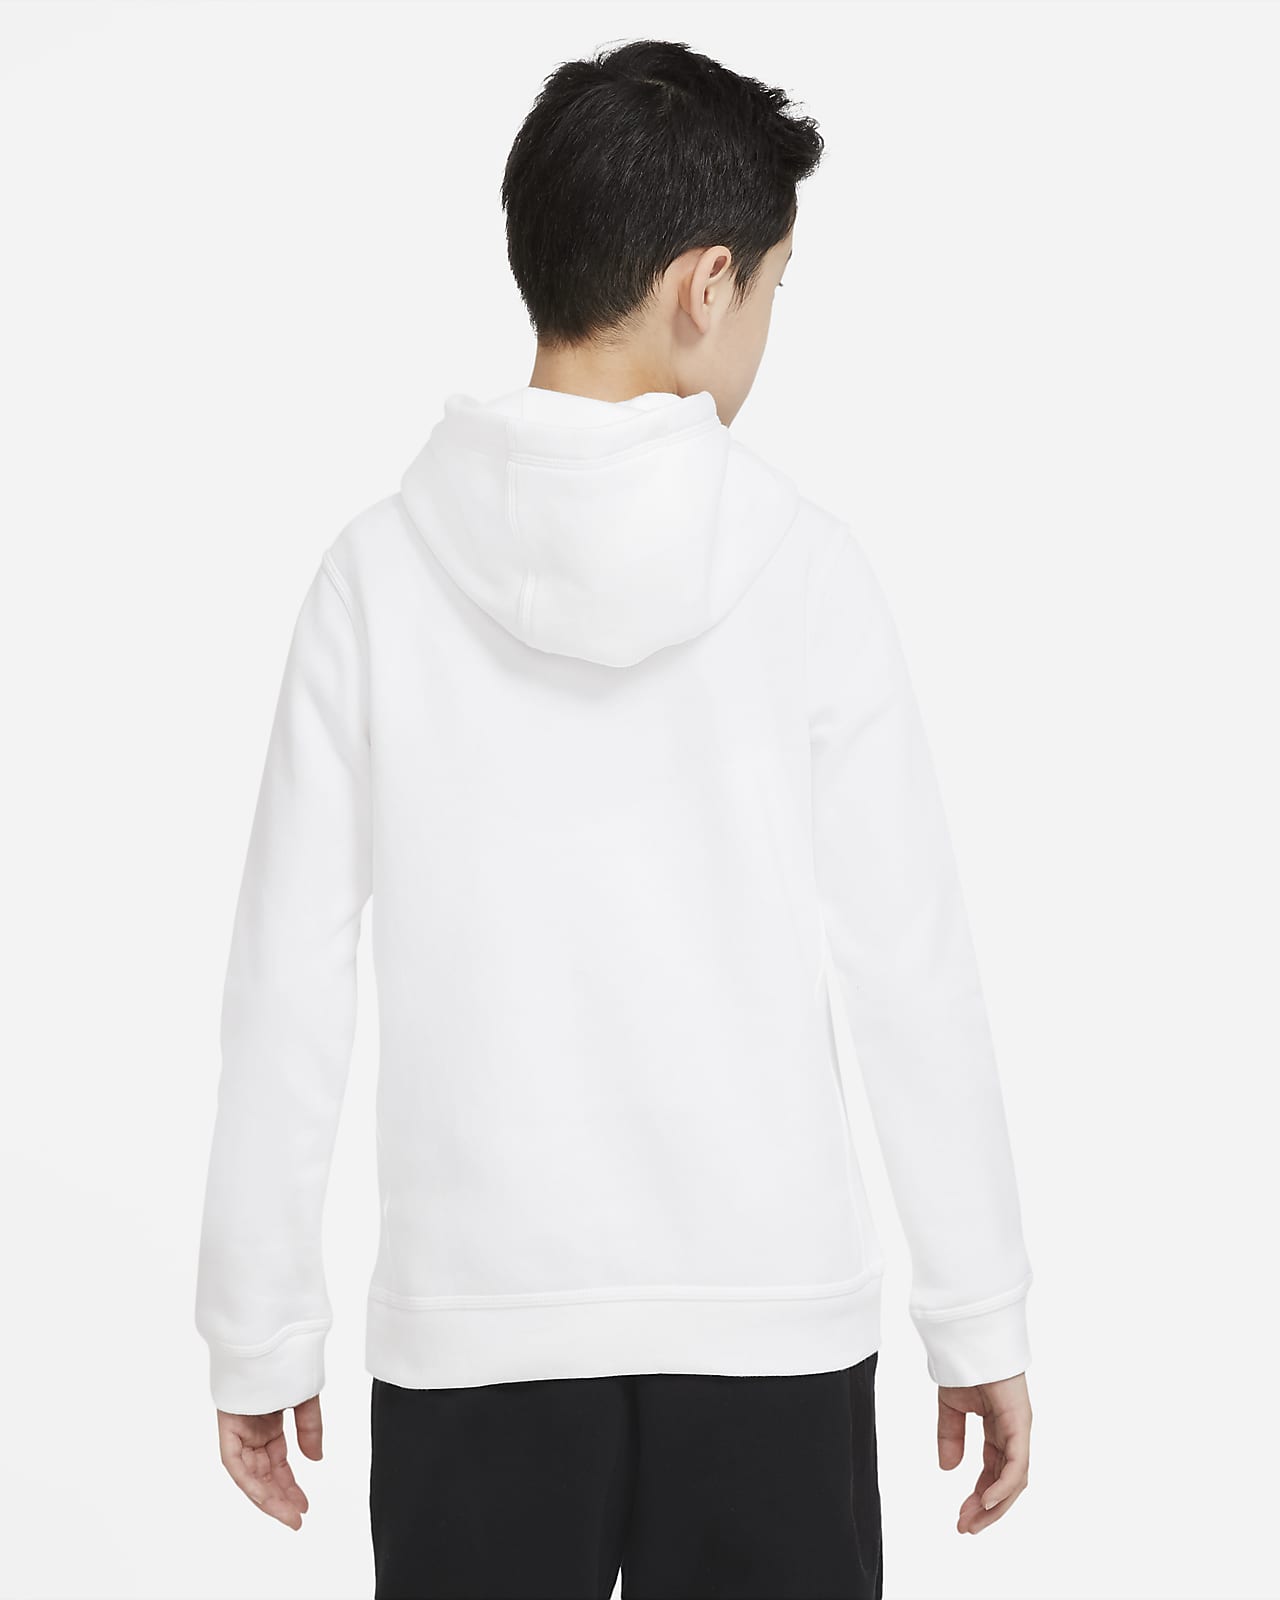 white nike jacket with hood